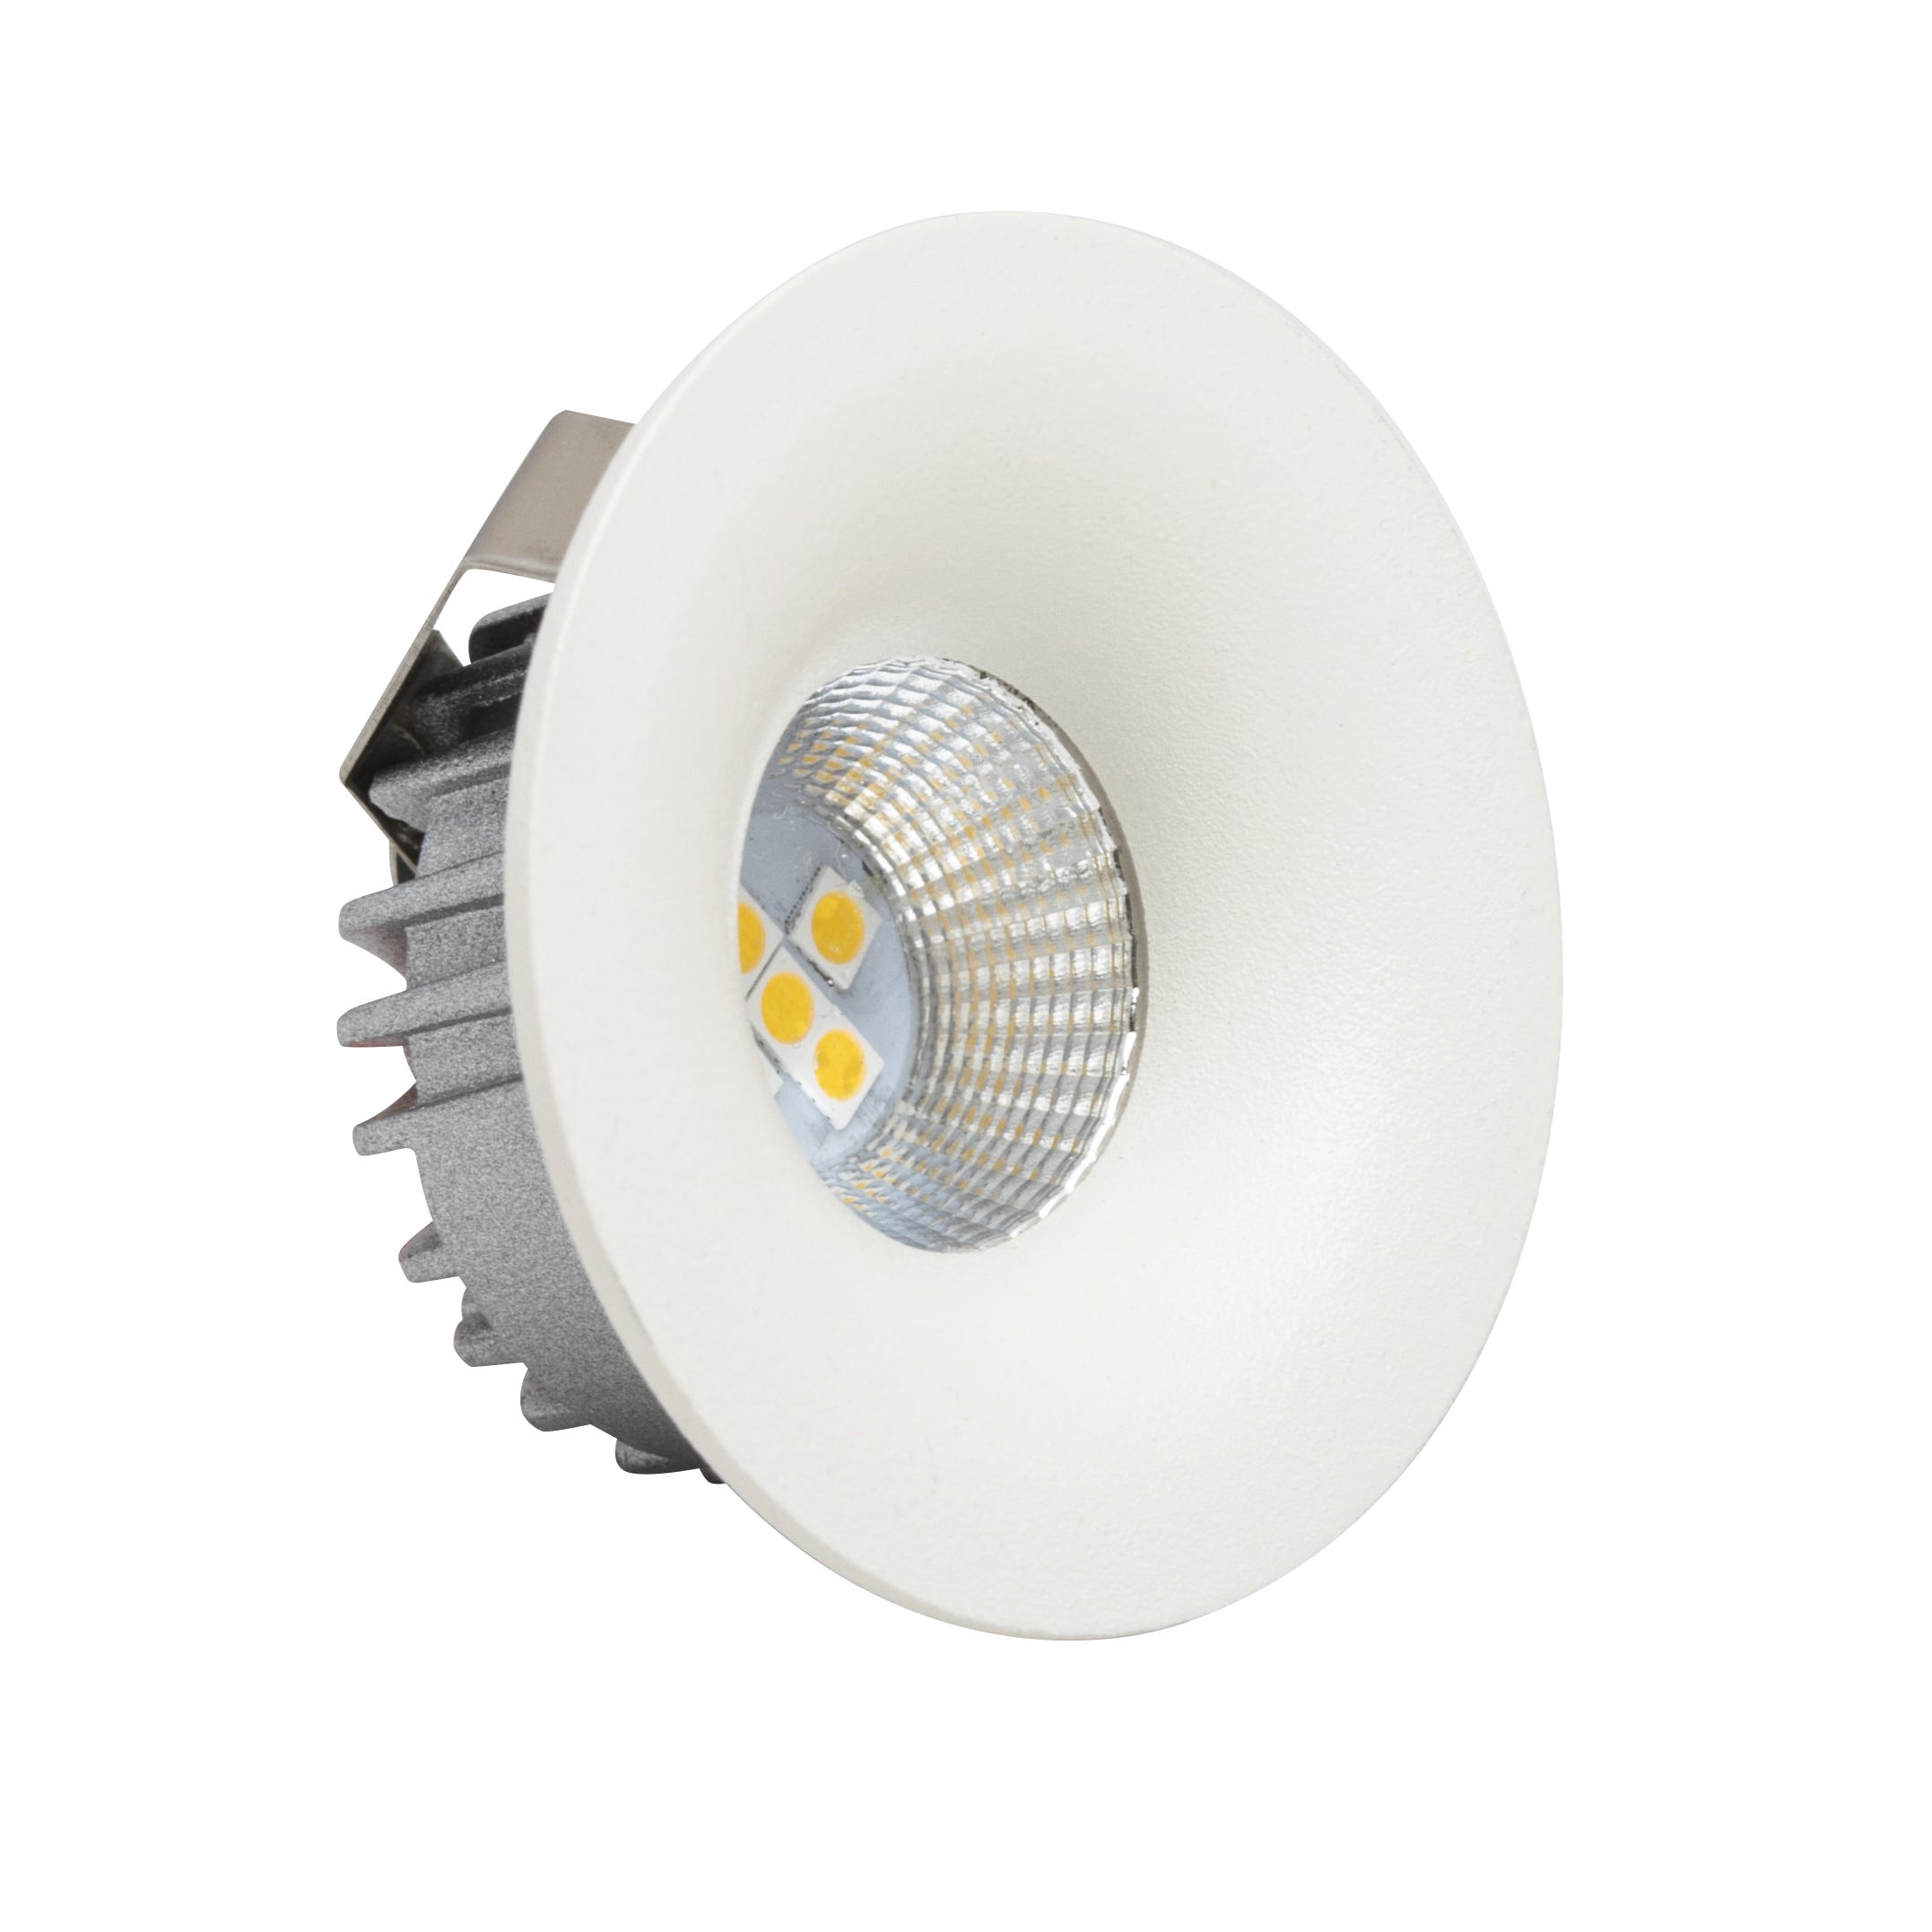 Foco empotrable LED redondo blanco 420lm blanco cálido IP20 5.2cm